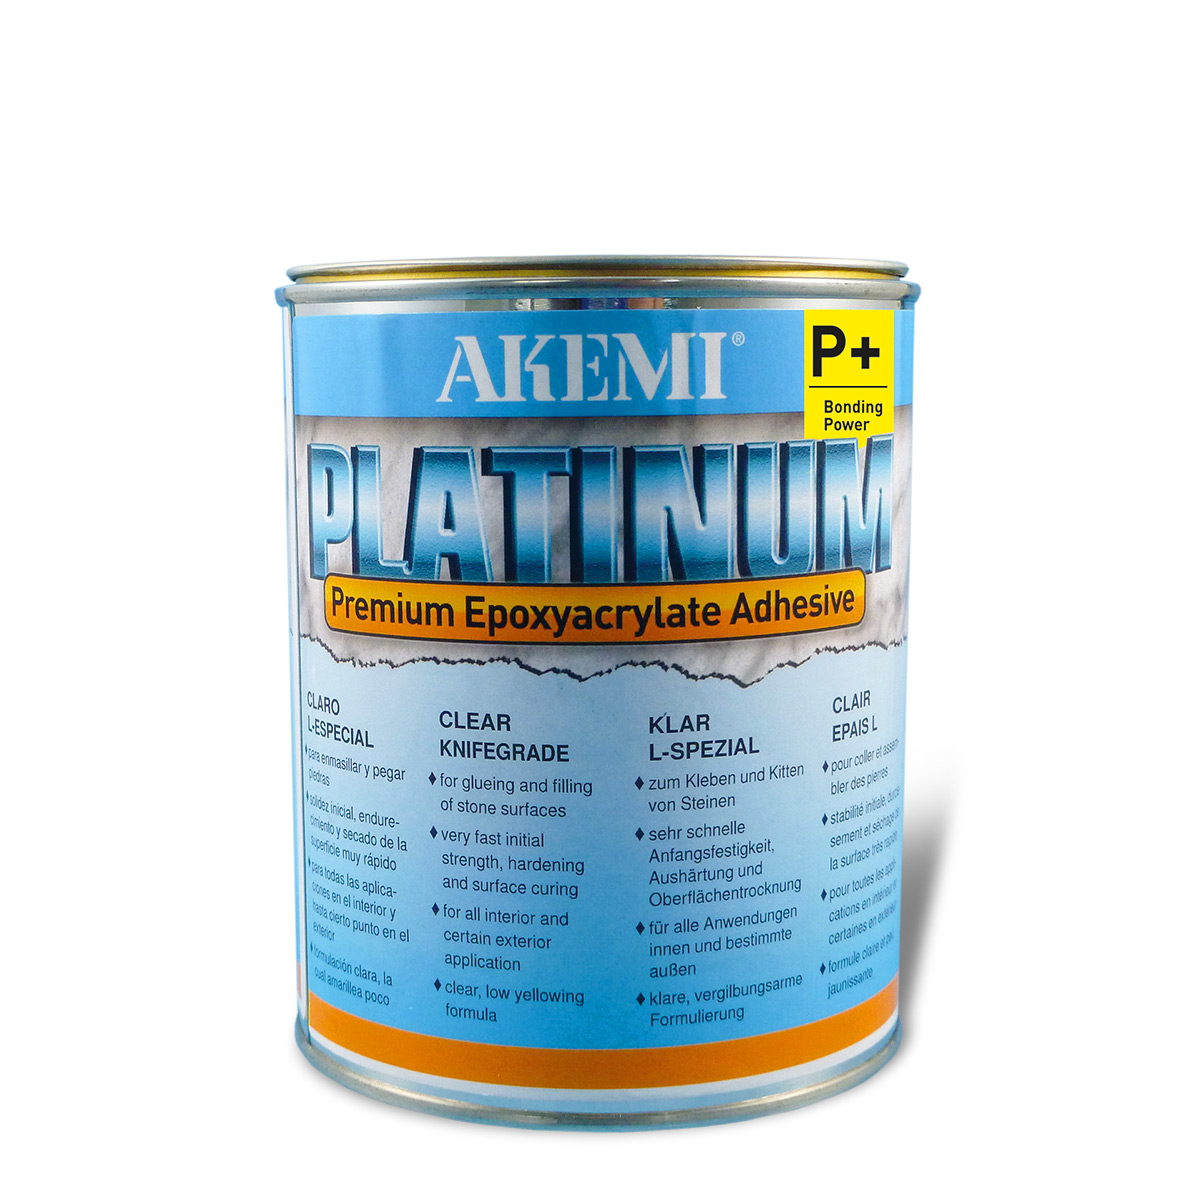 Akemi PLATINUM P+ L-Spezial 900ml flüssiger, transparent-klarer Kleber 10726 Kopie